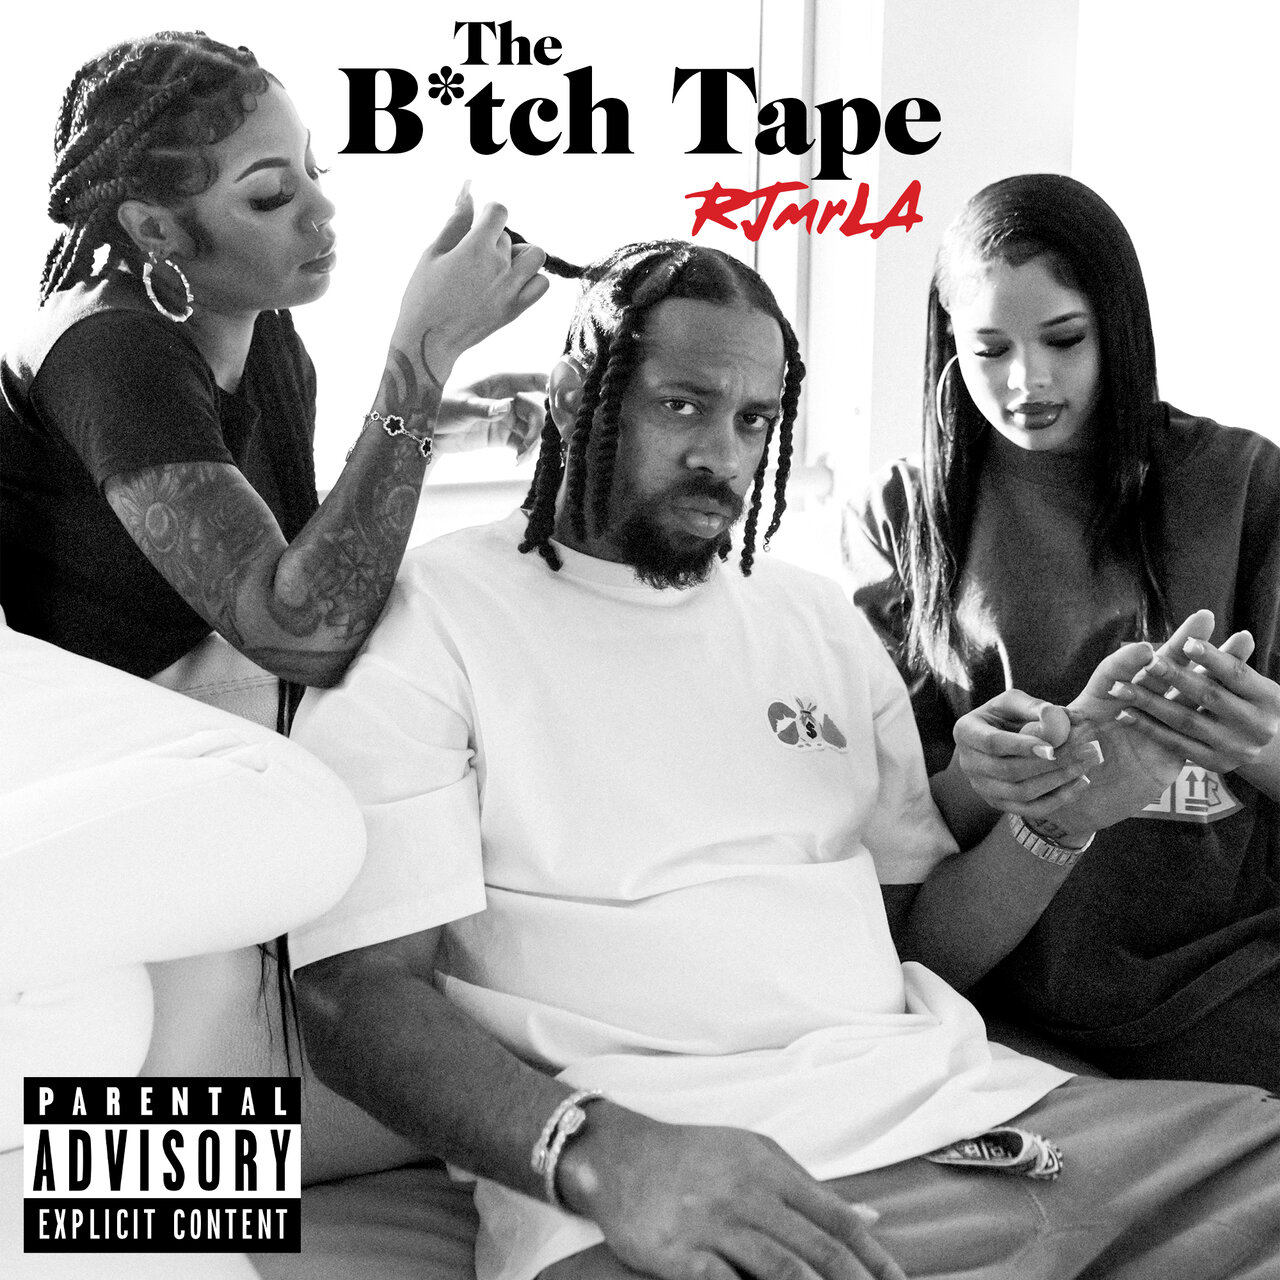 rjmrla the bitch tape